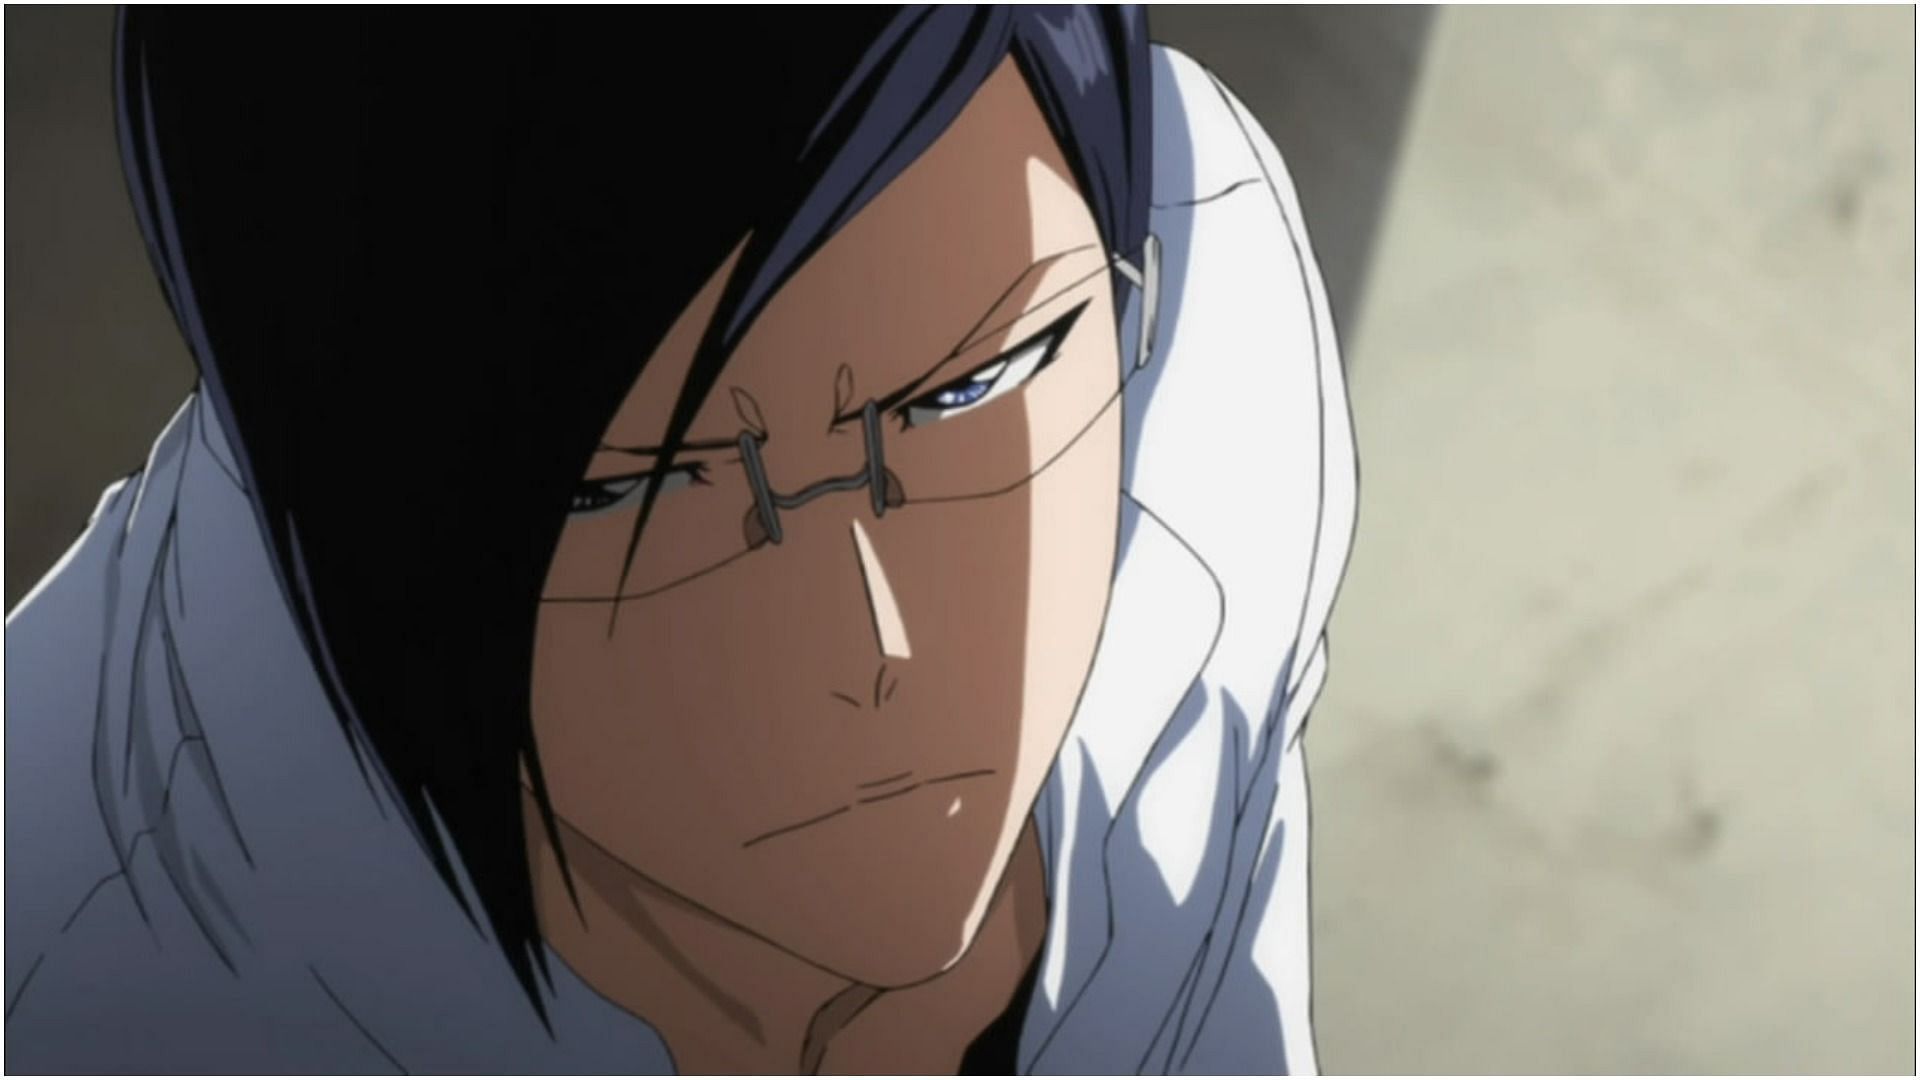 Uryu Ishida as shown in the anime (Image via Pierrot)